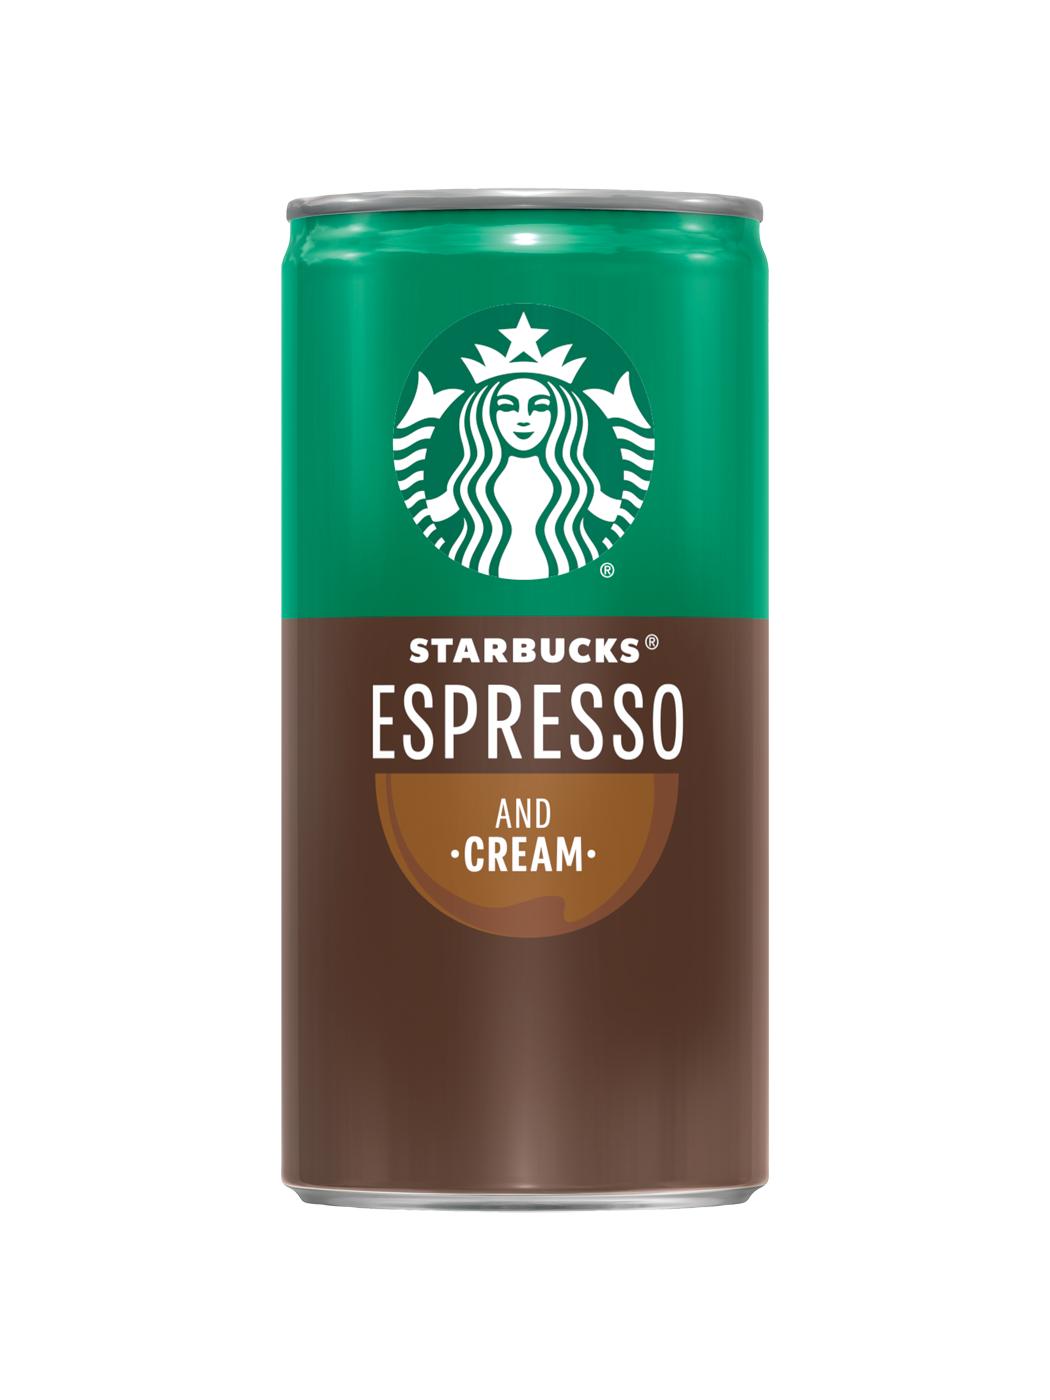 Starbucks Espresso and Cream 6.5 oz Cans; image 2 of 2